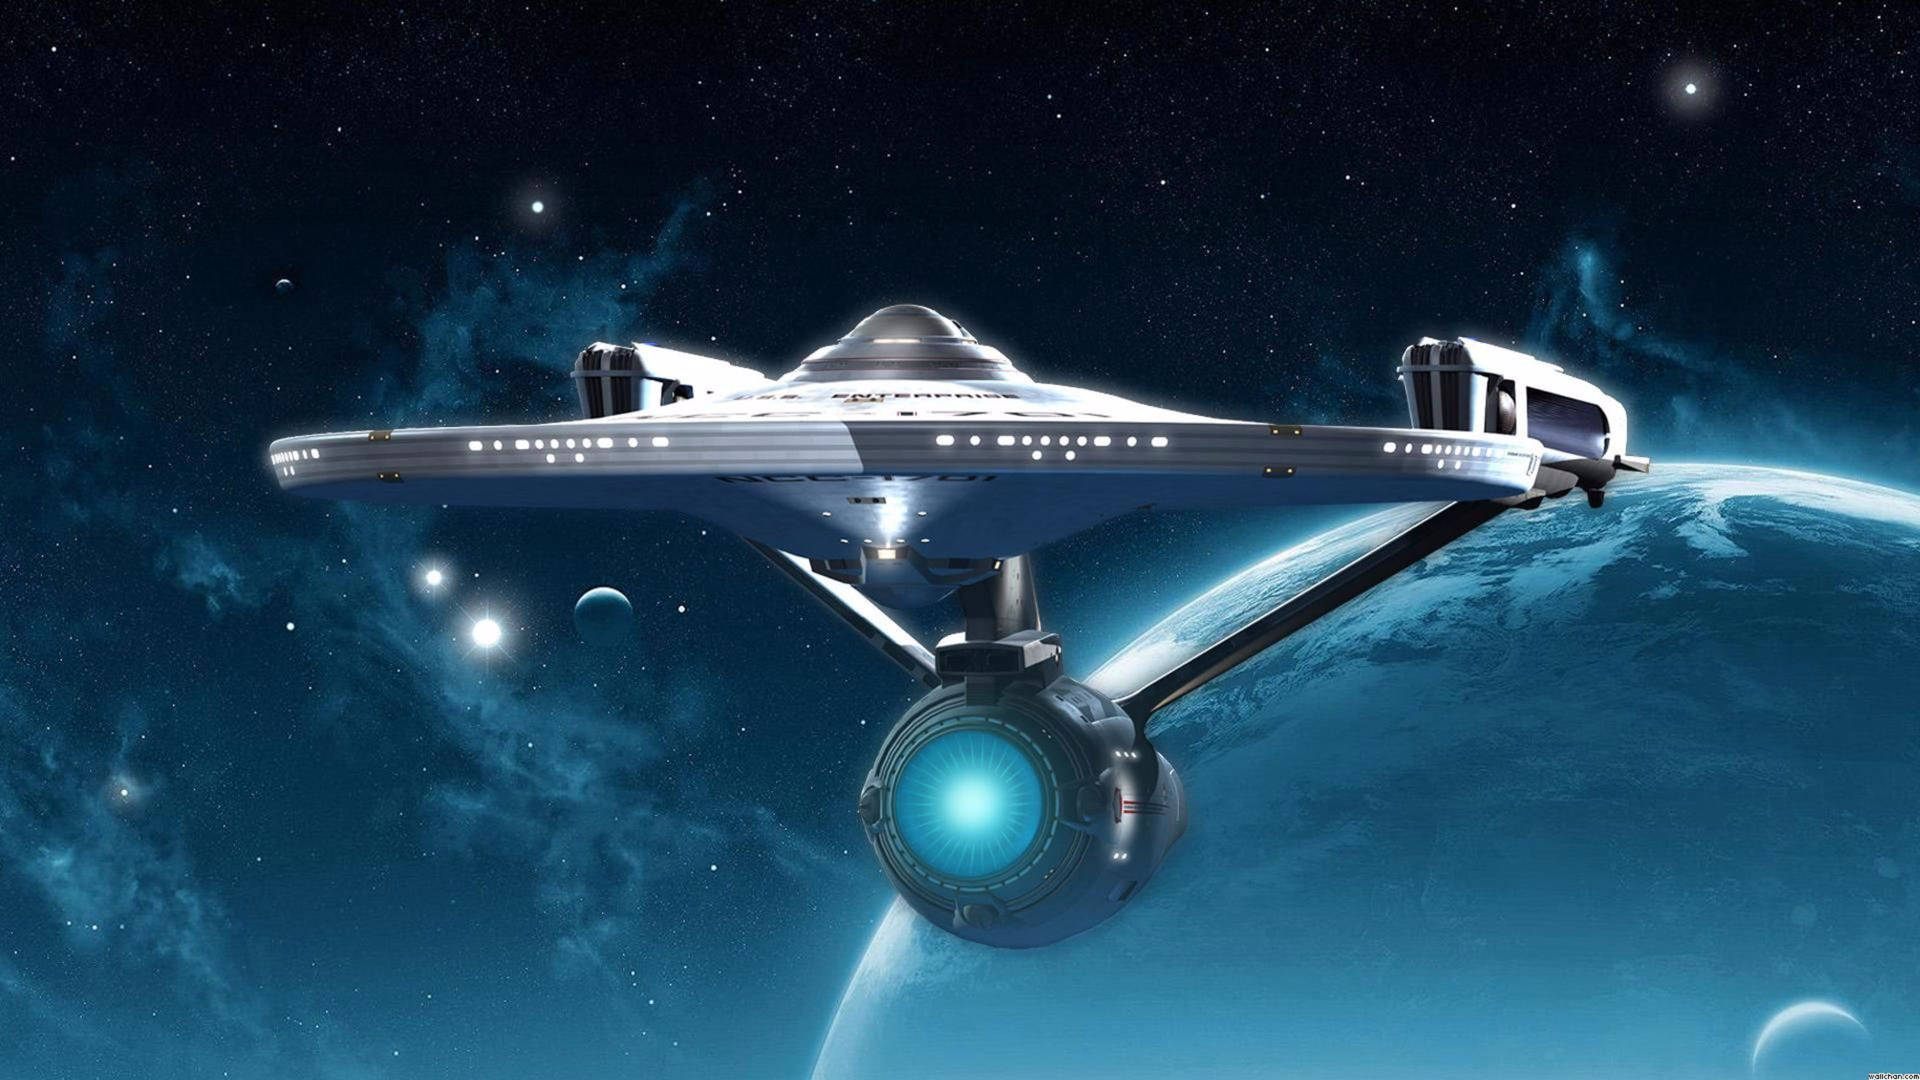 The Iconic U.S.S. Enterprise Spacecraft of Star Trek Wallpaper